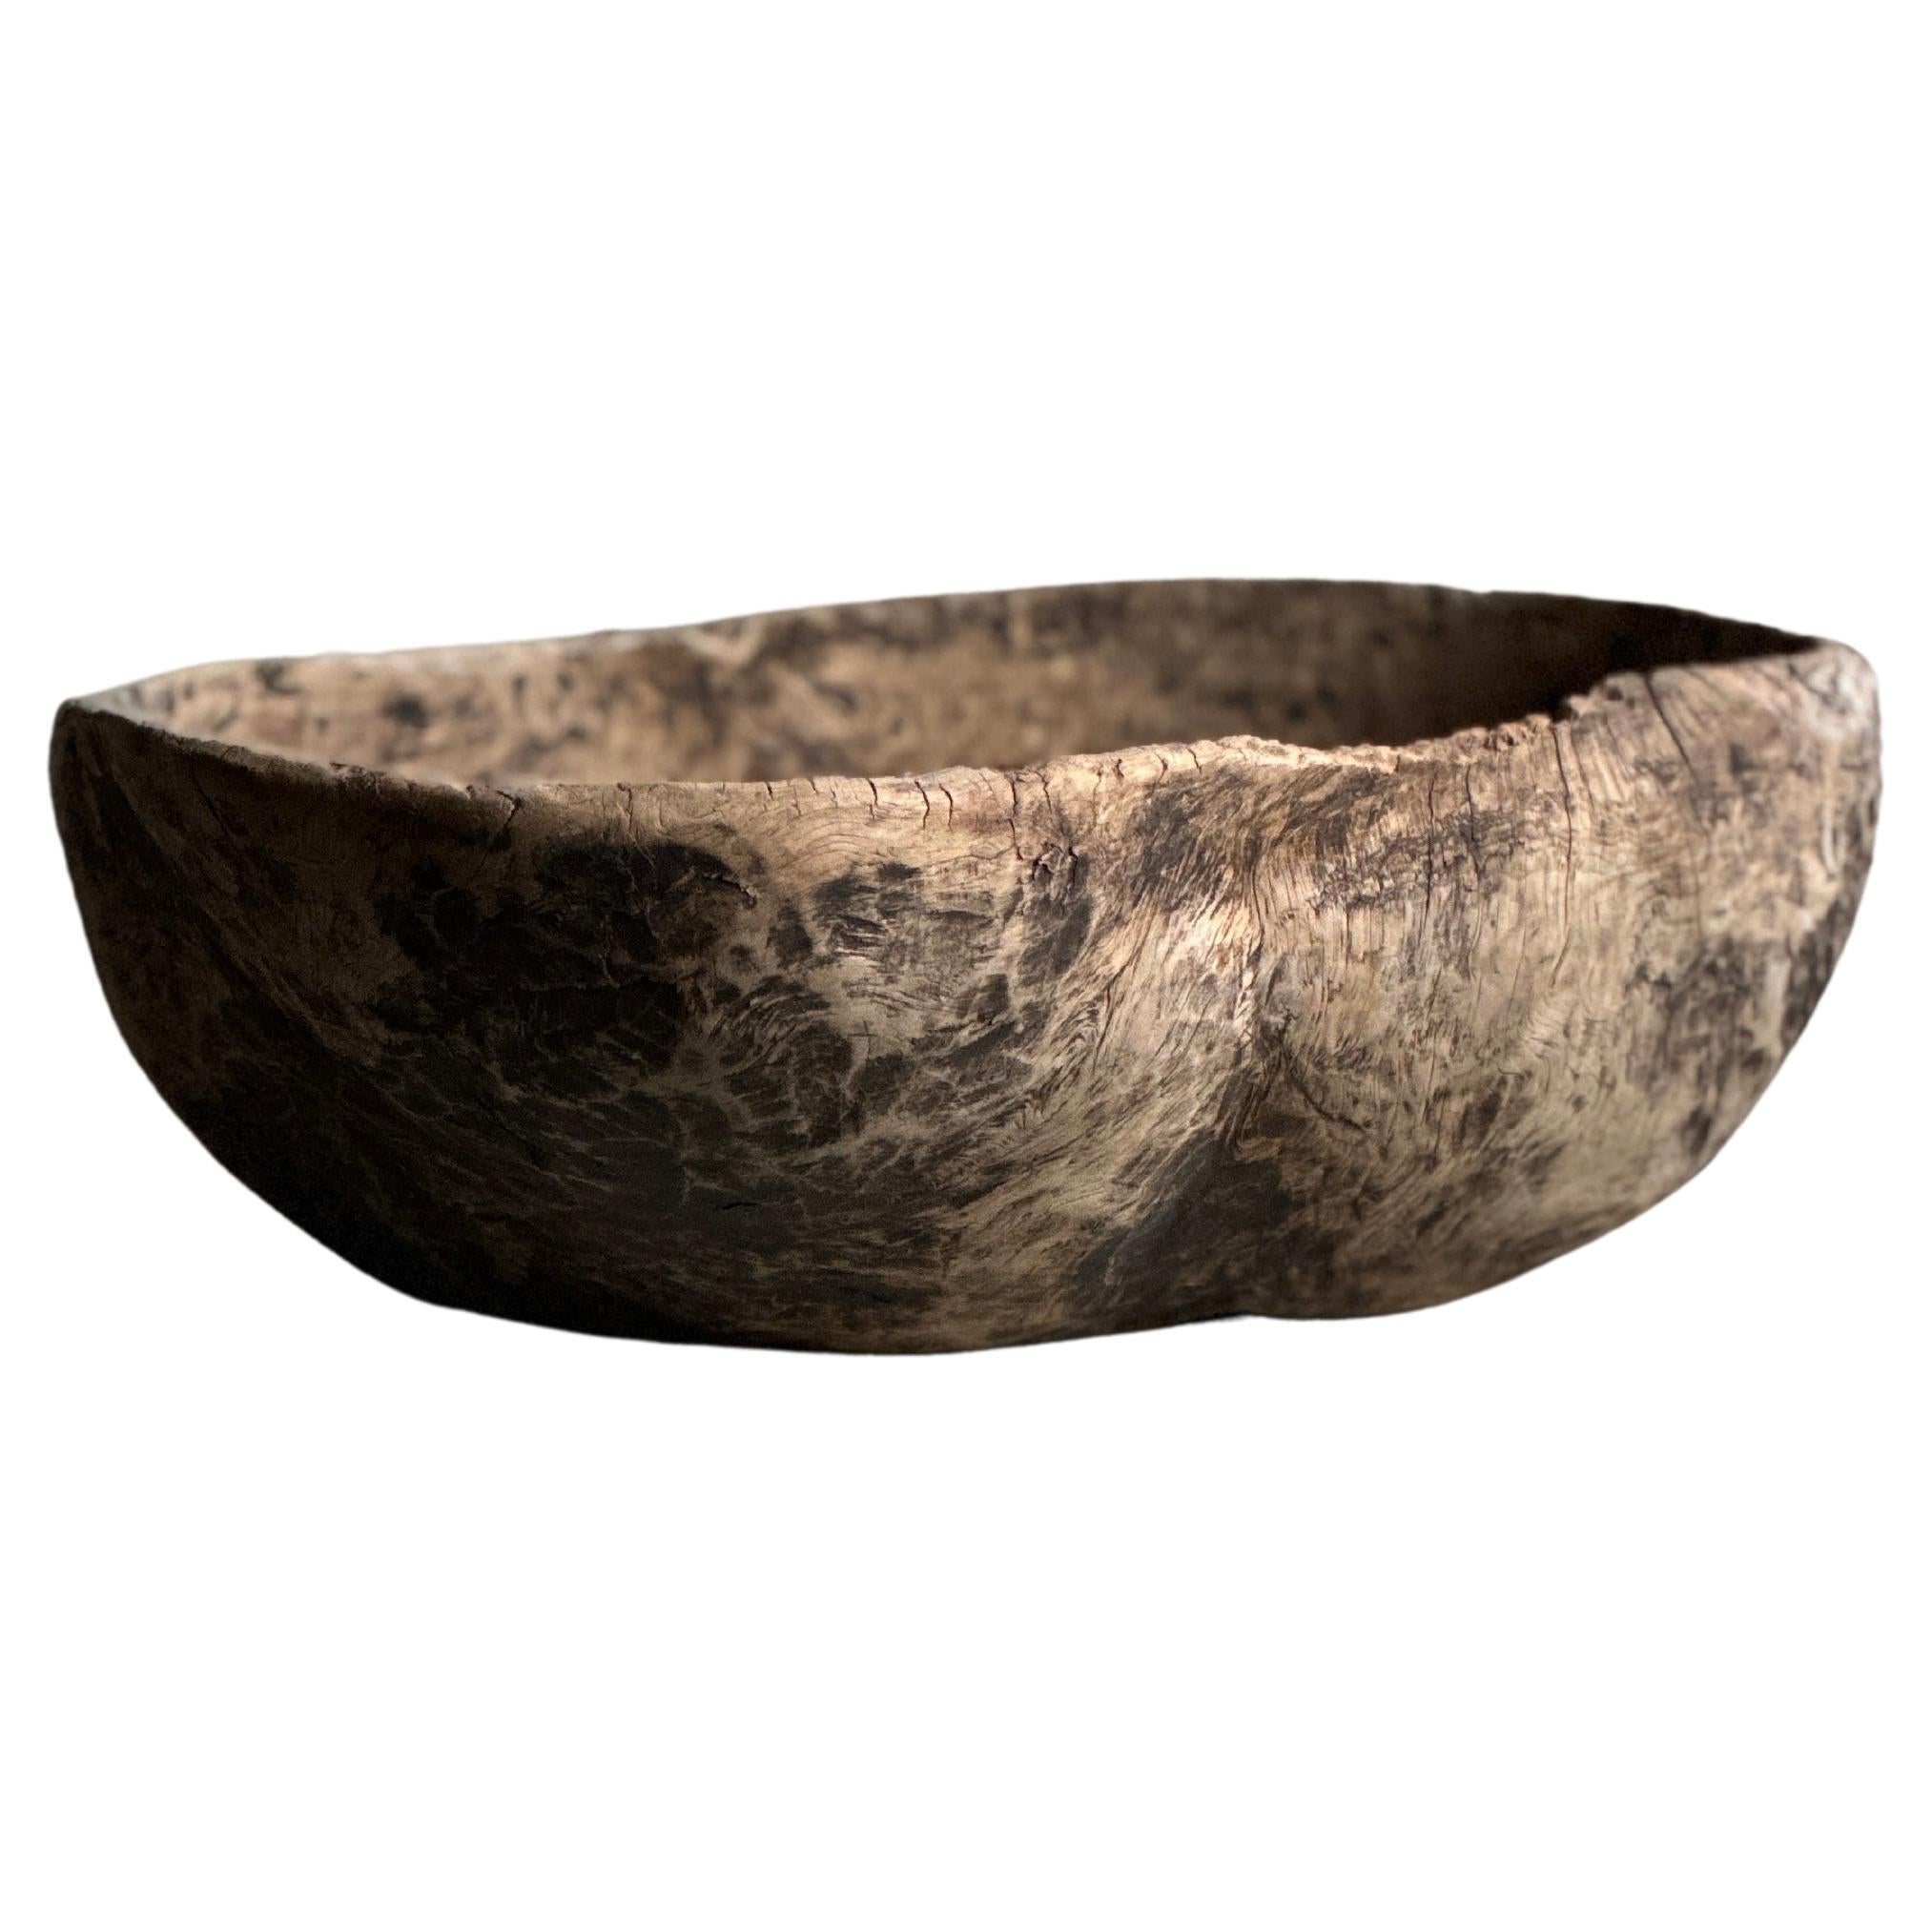 Antique Root Bowl, Wabi Sabi Style, Scandinavia 1800s